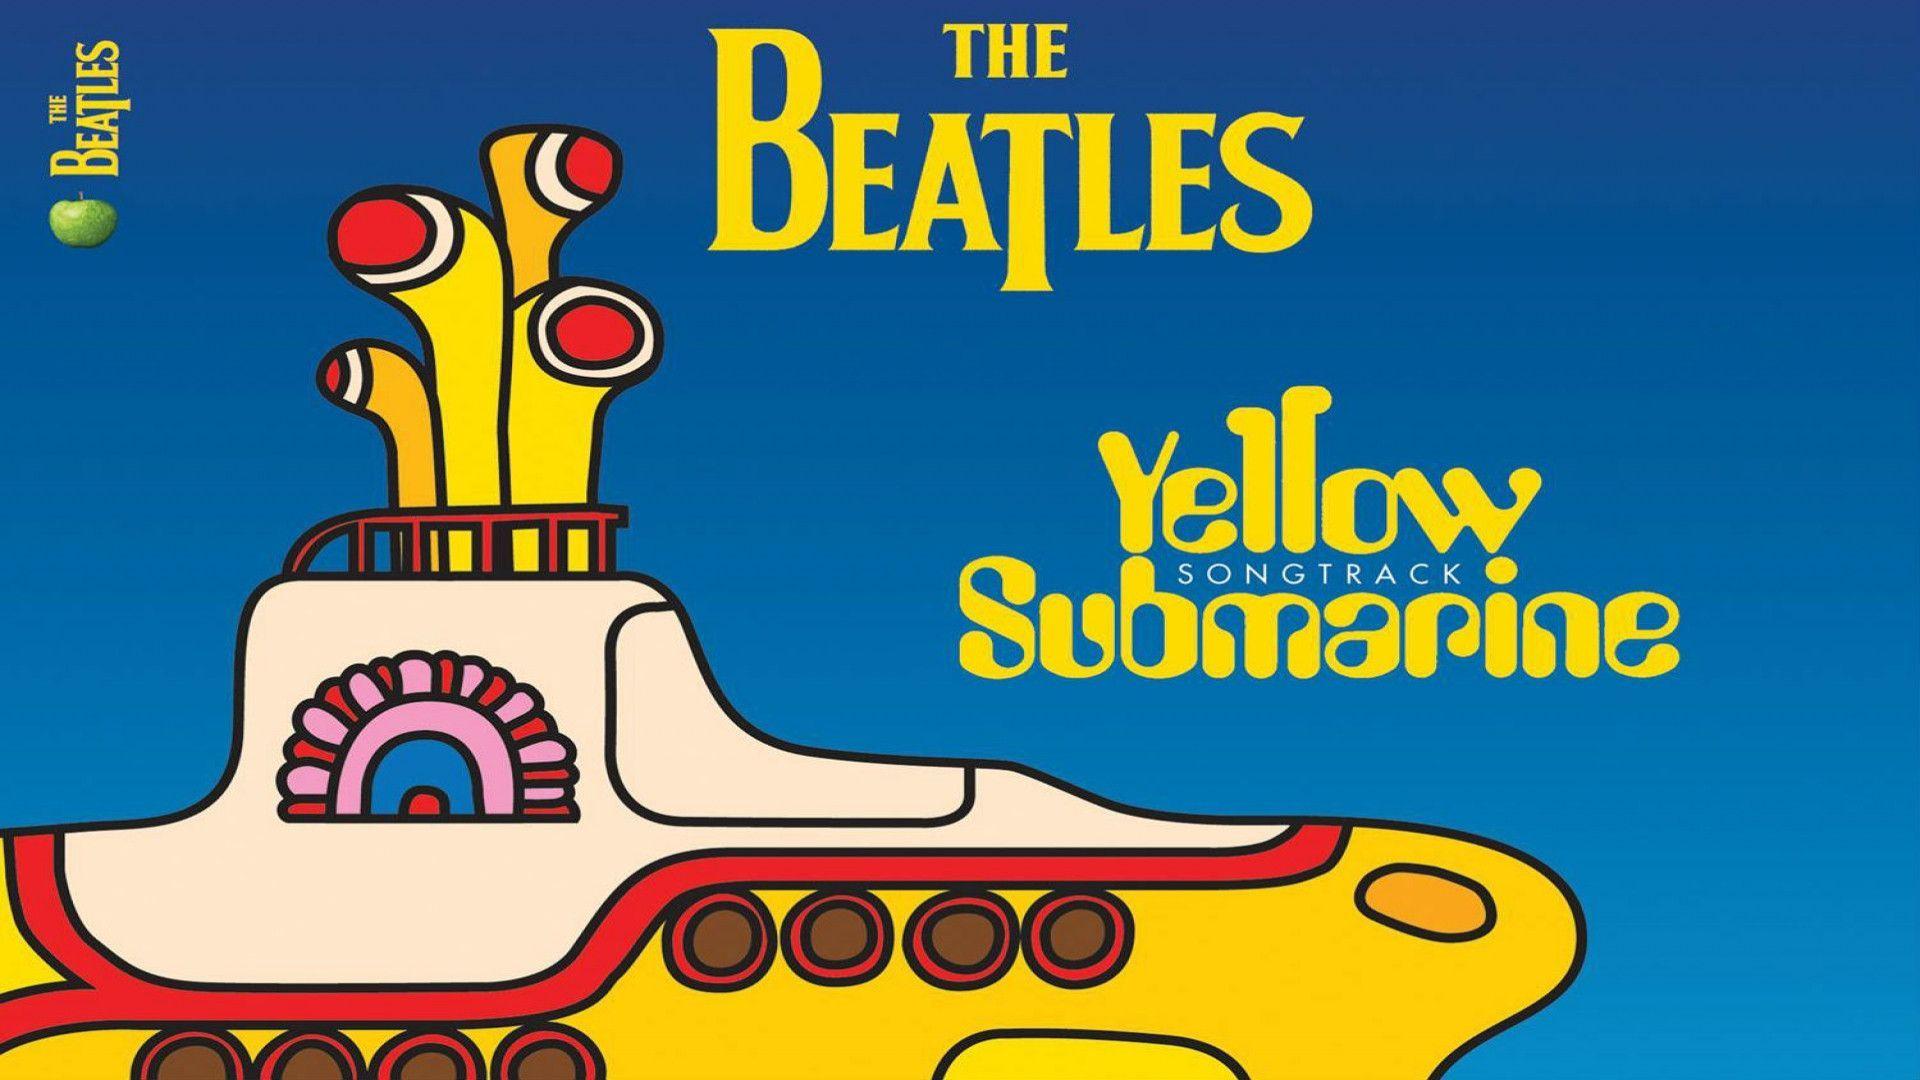 The Beatles Yellow Submarine Soundtrack 1920x1080 HD Wallpaper